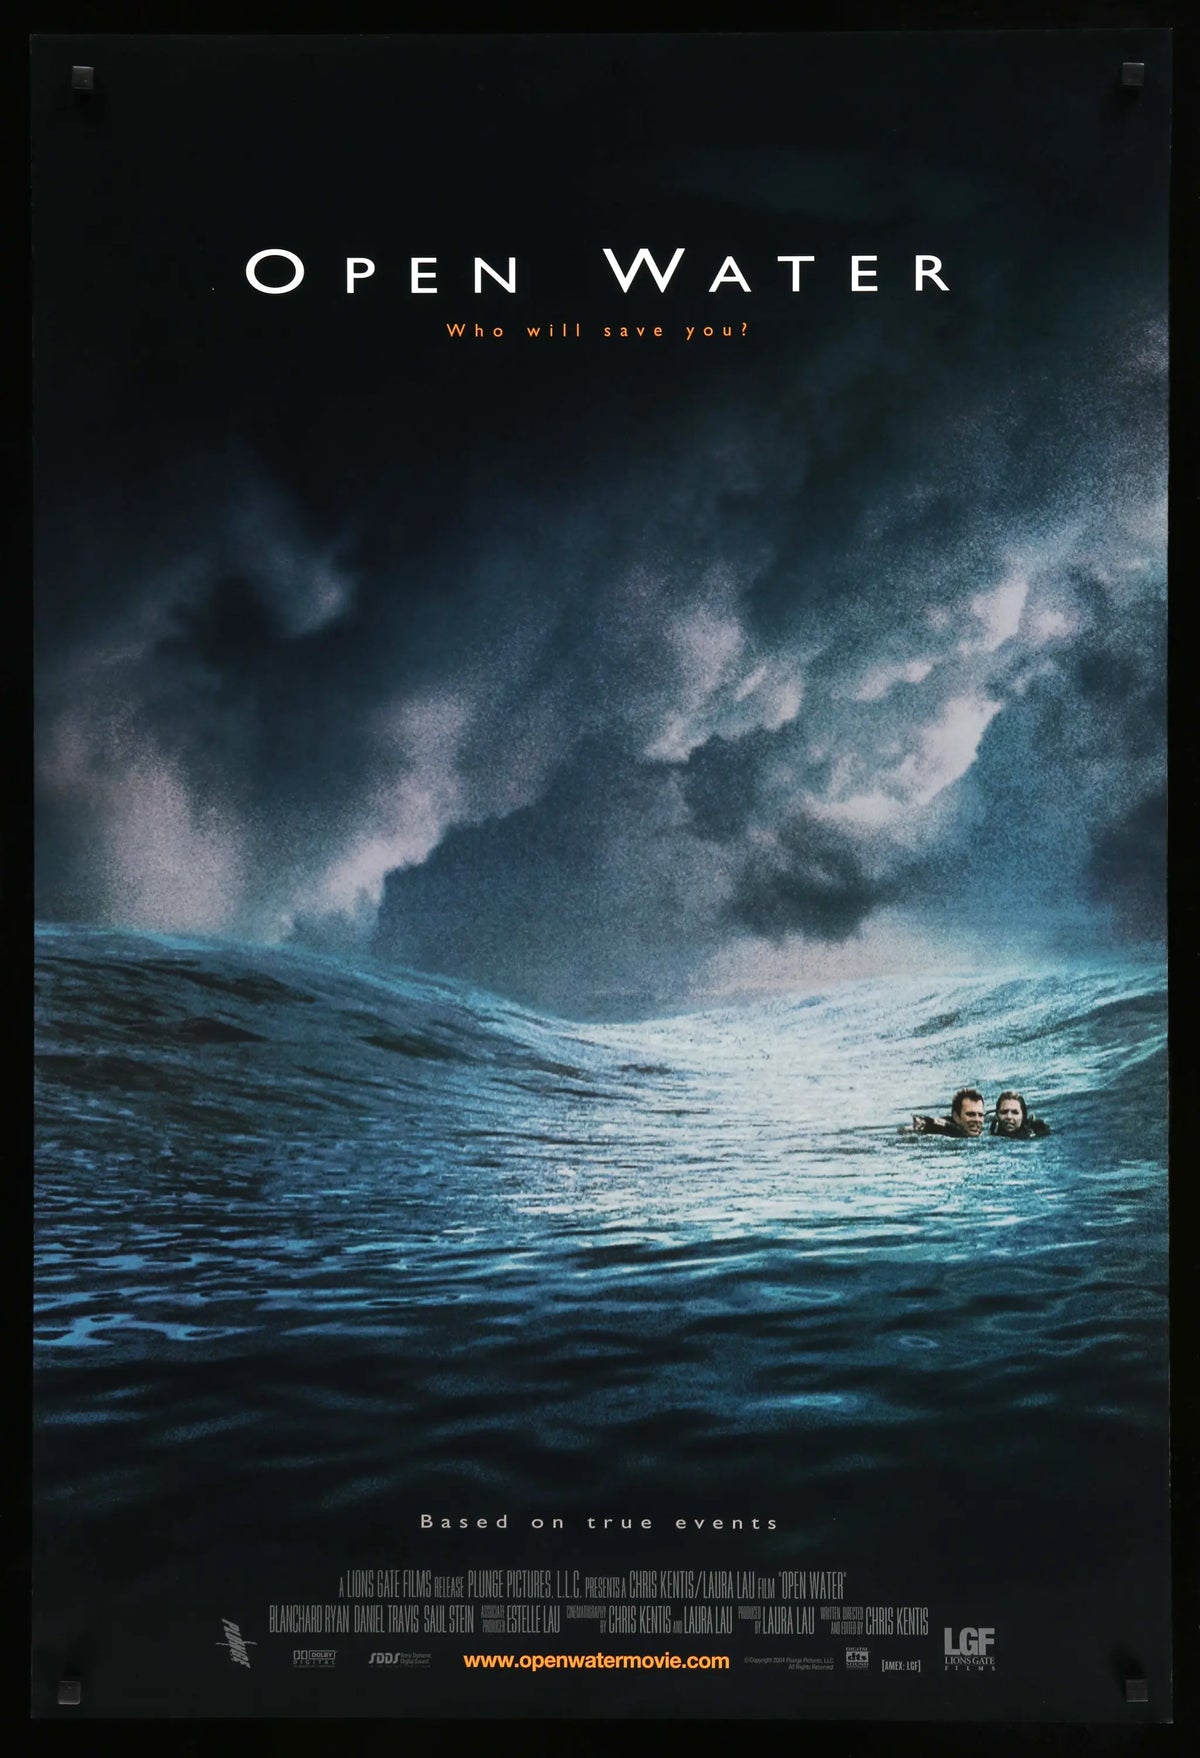 Open Water (2003) original movie poster for sale at Original Film Art